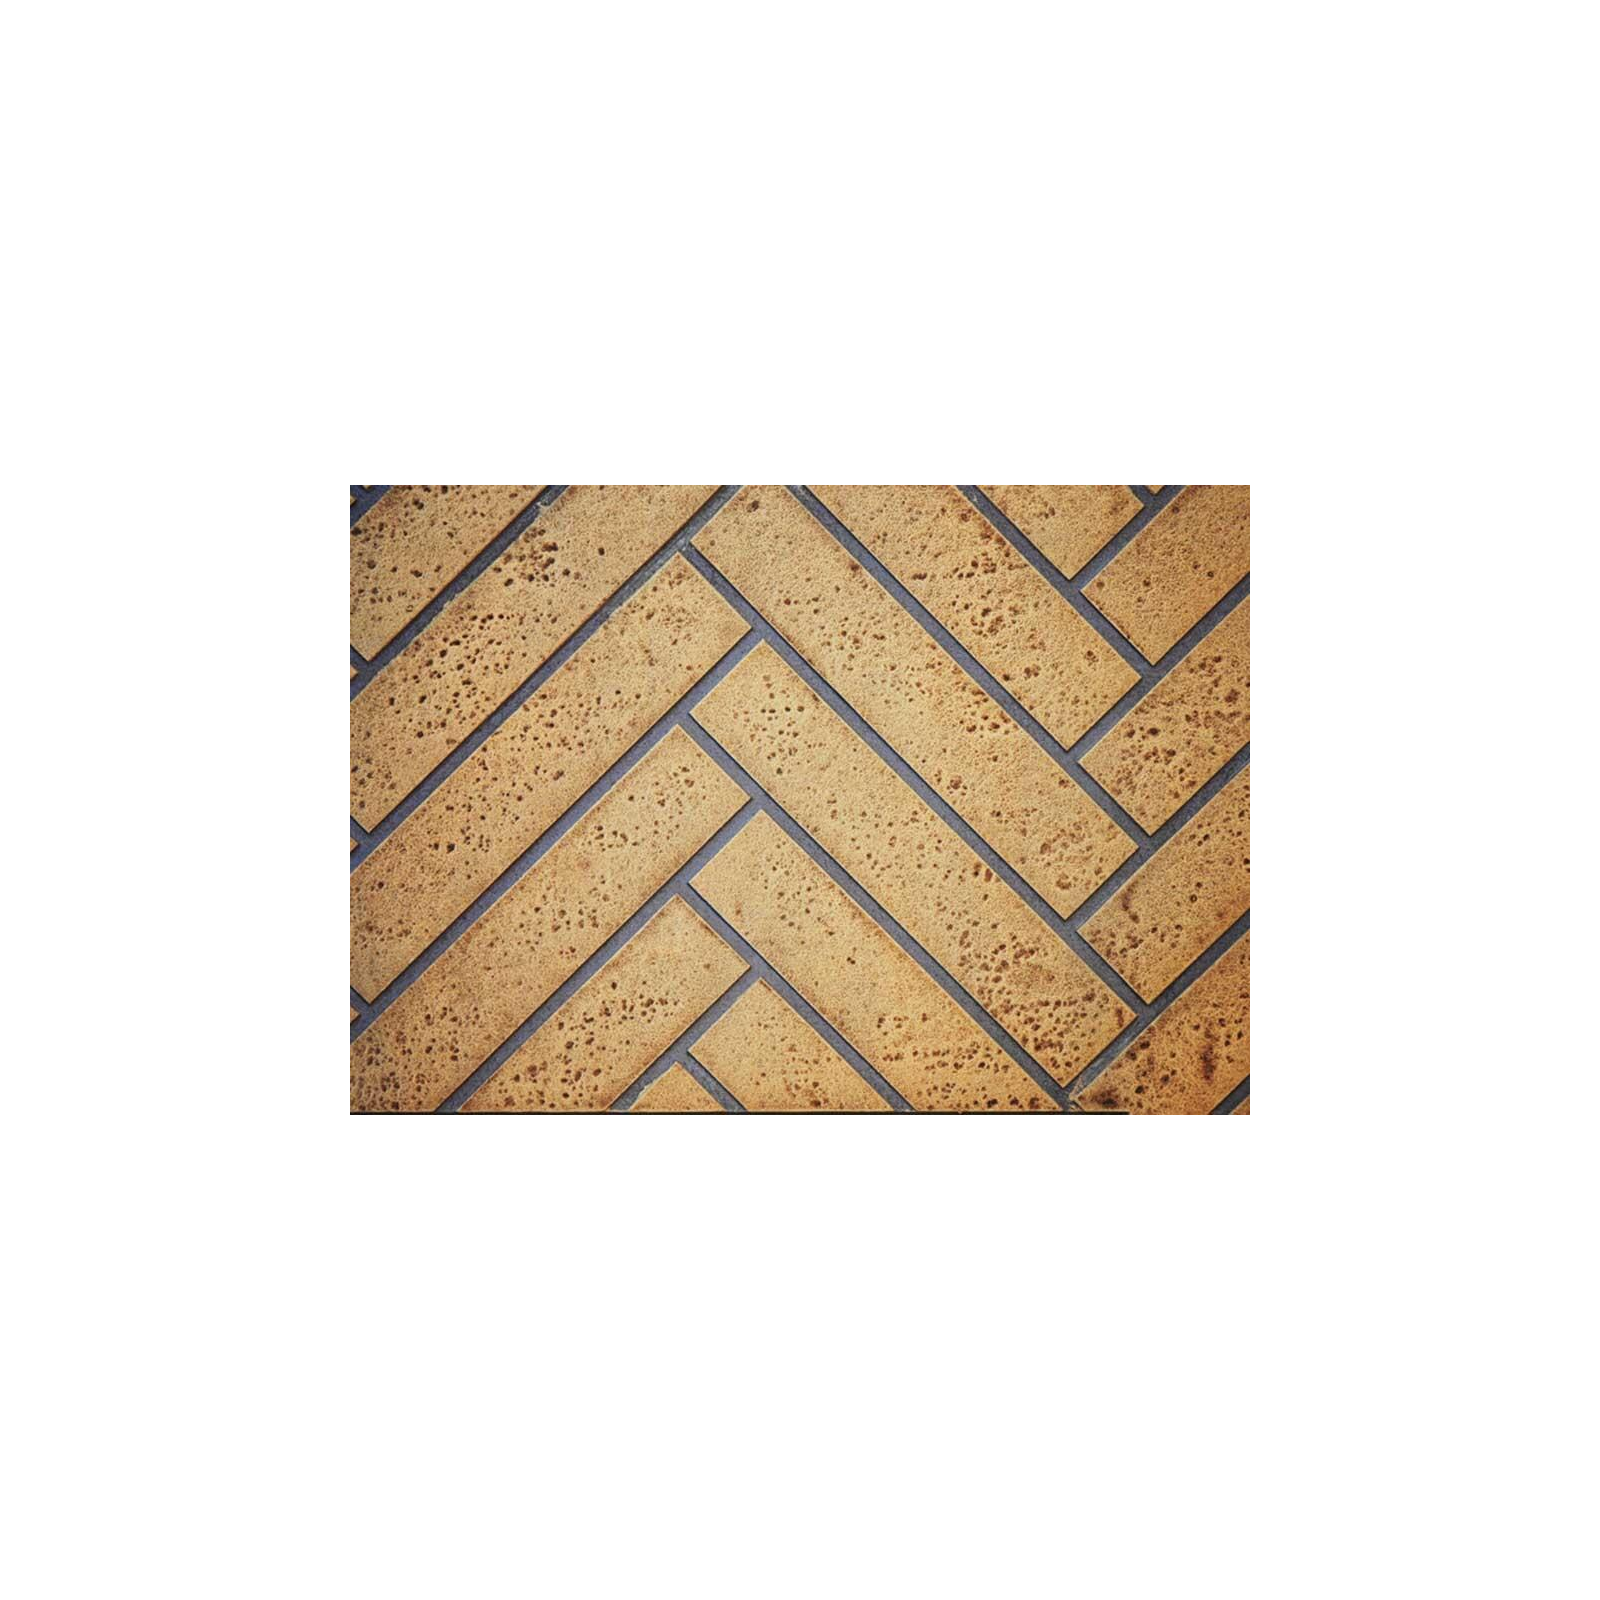 Napoleon Herringbone Decorative Brick Panels - GD868KT